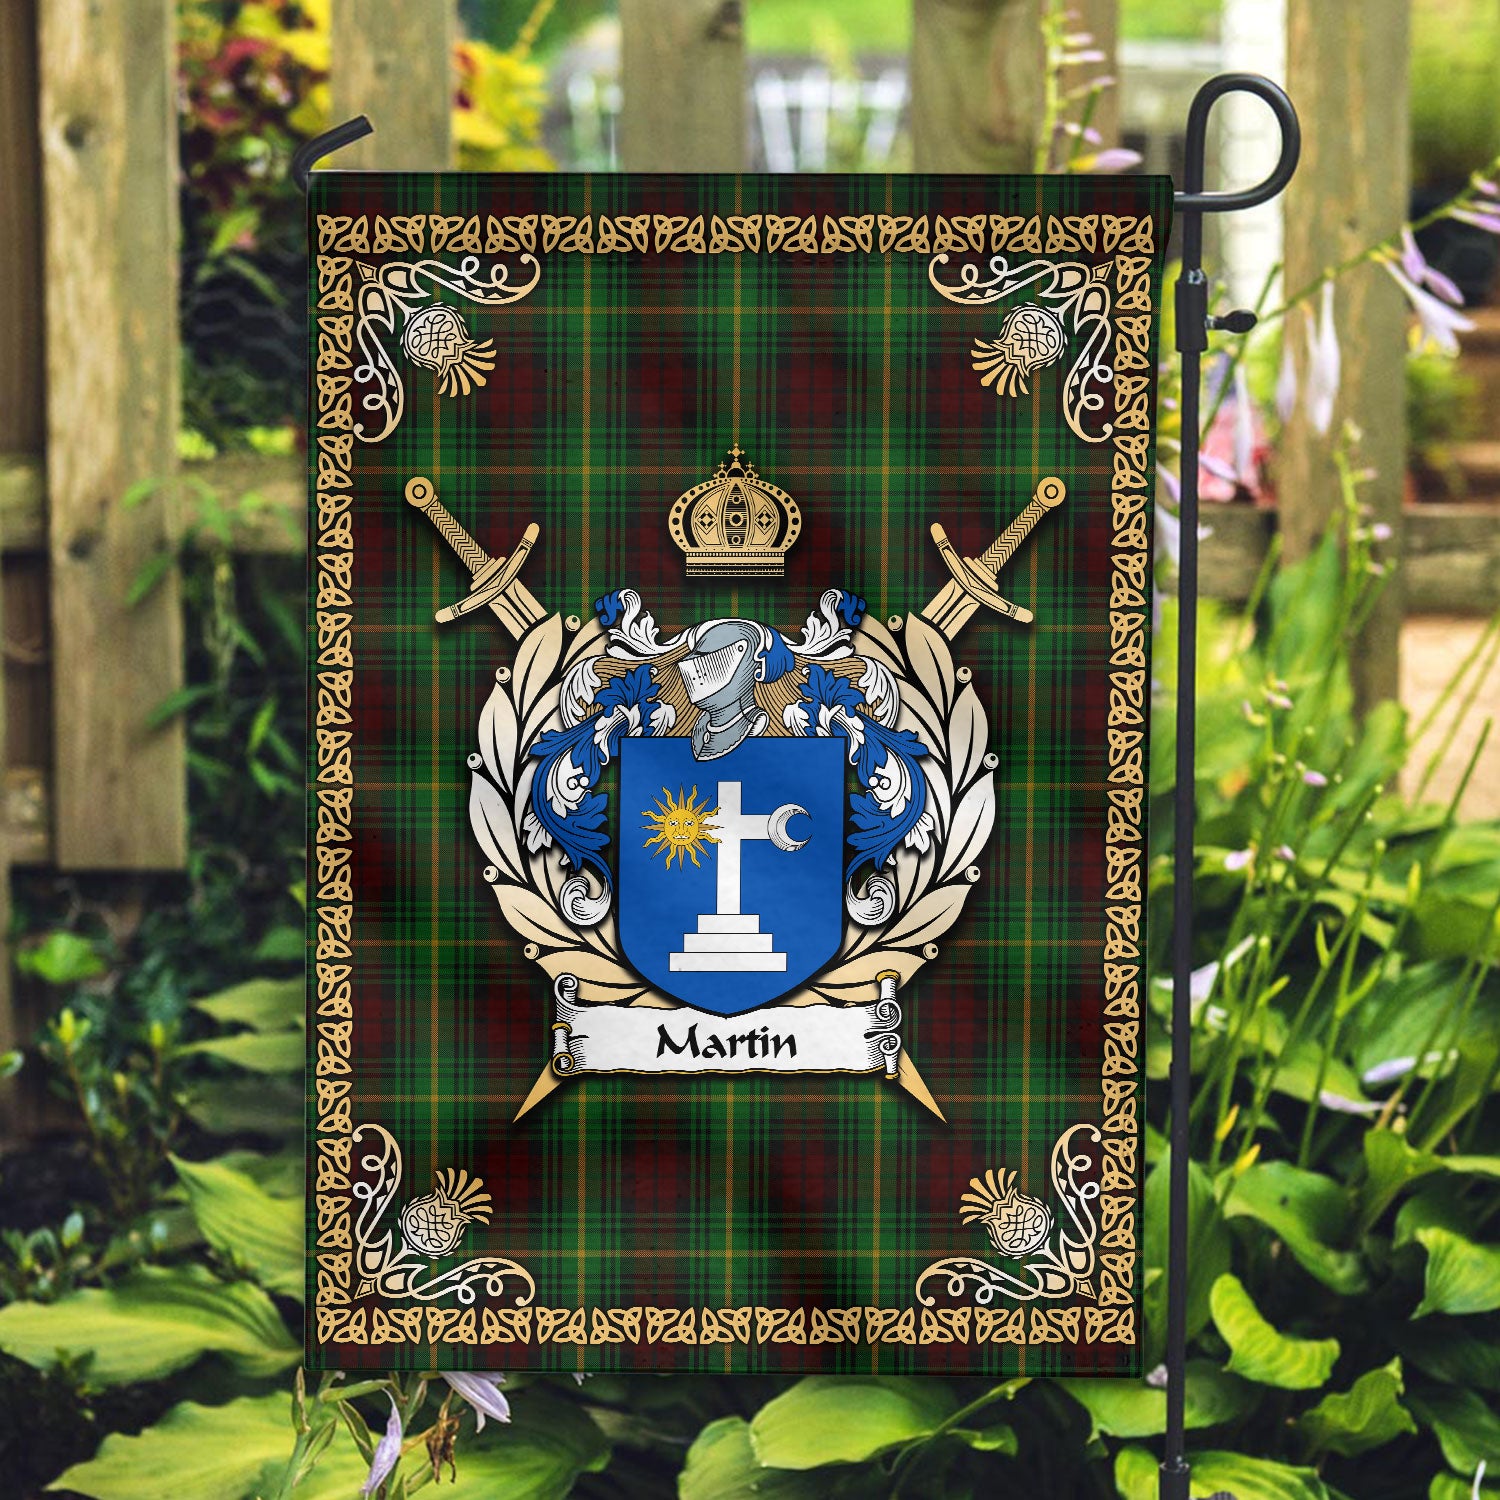 Martin Tartan Crest Garden Flag - Celtic Thistle Style